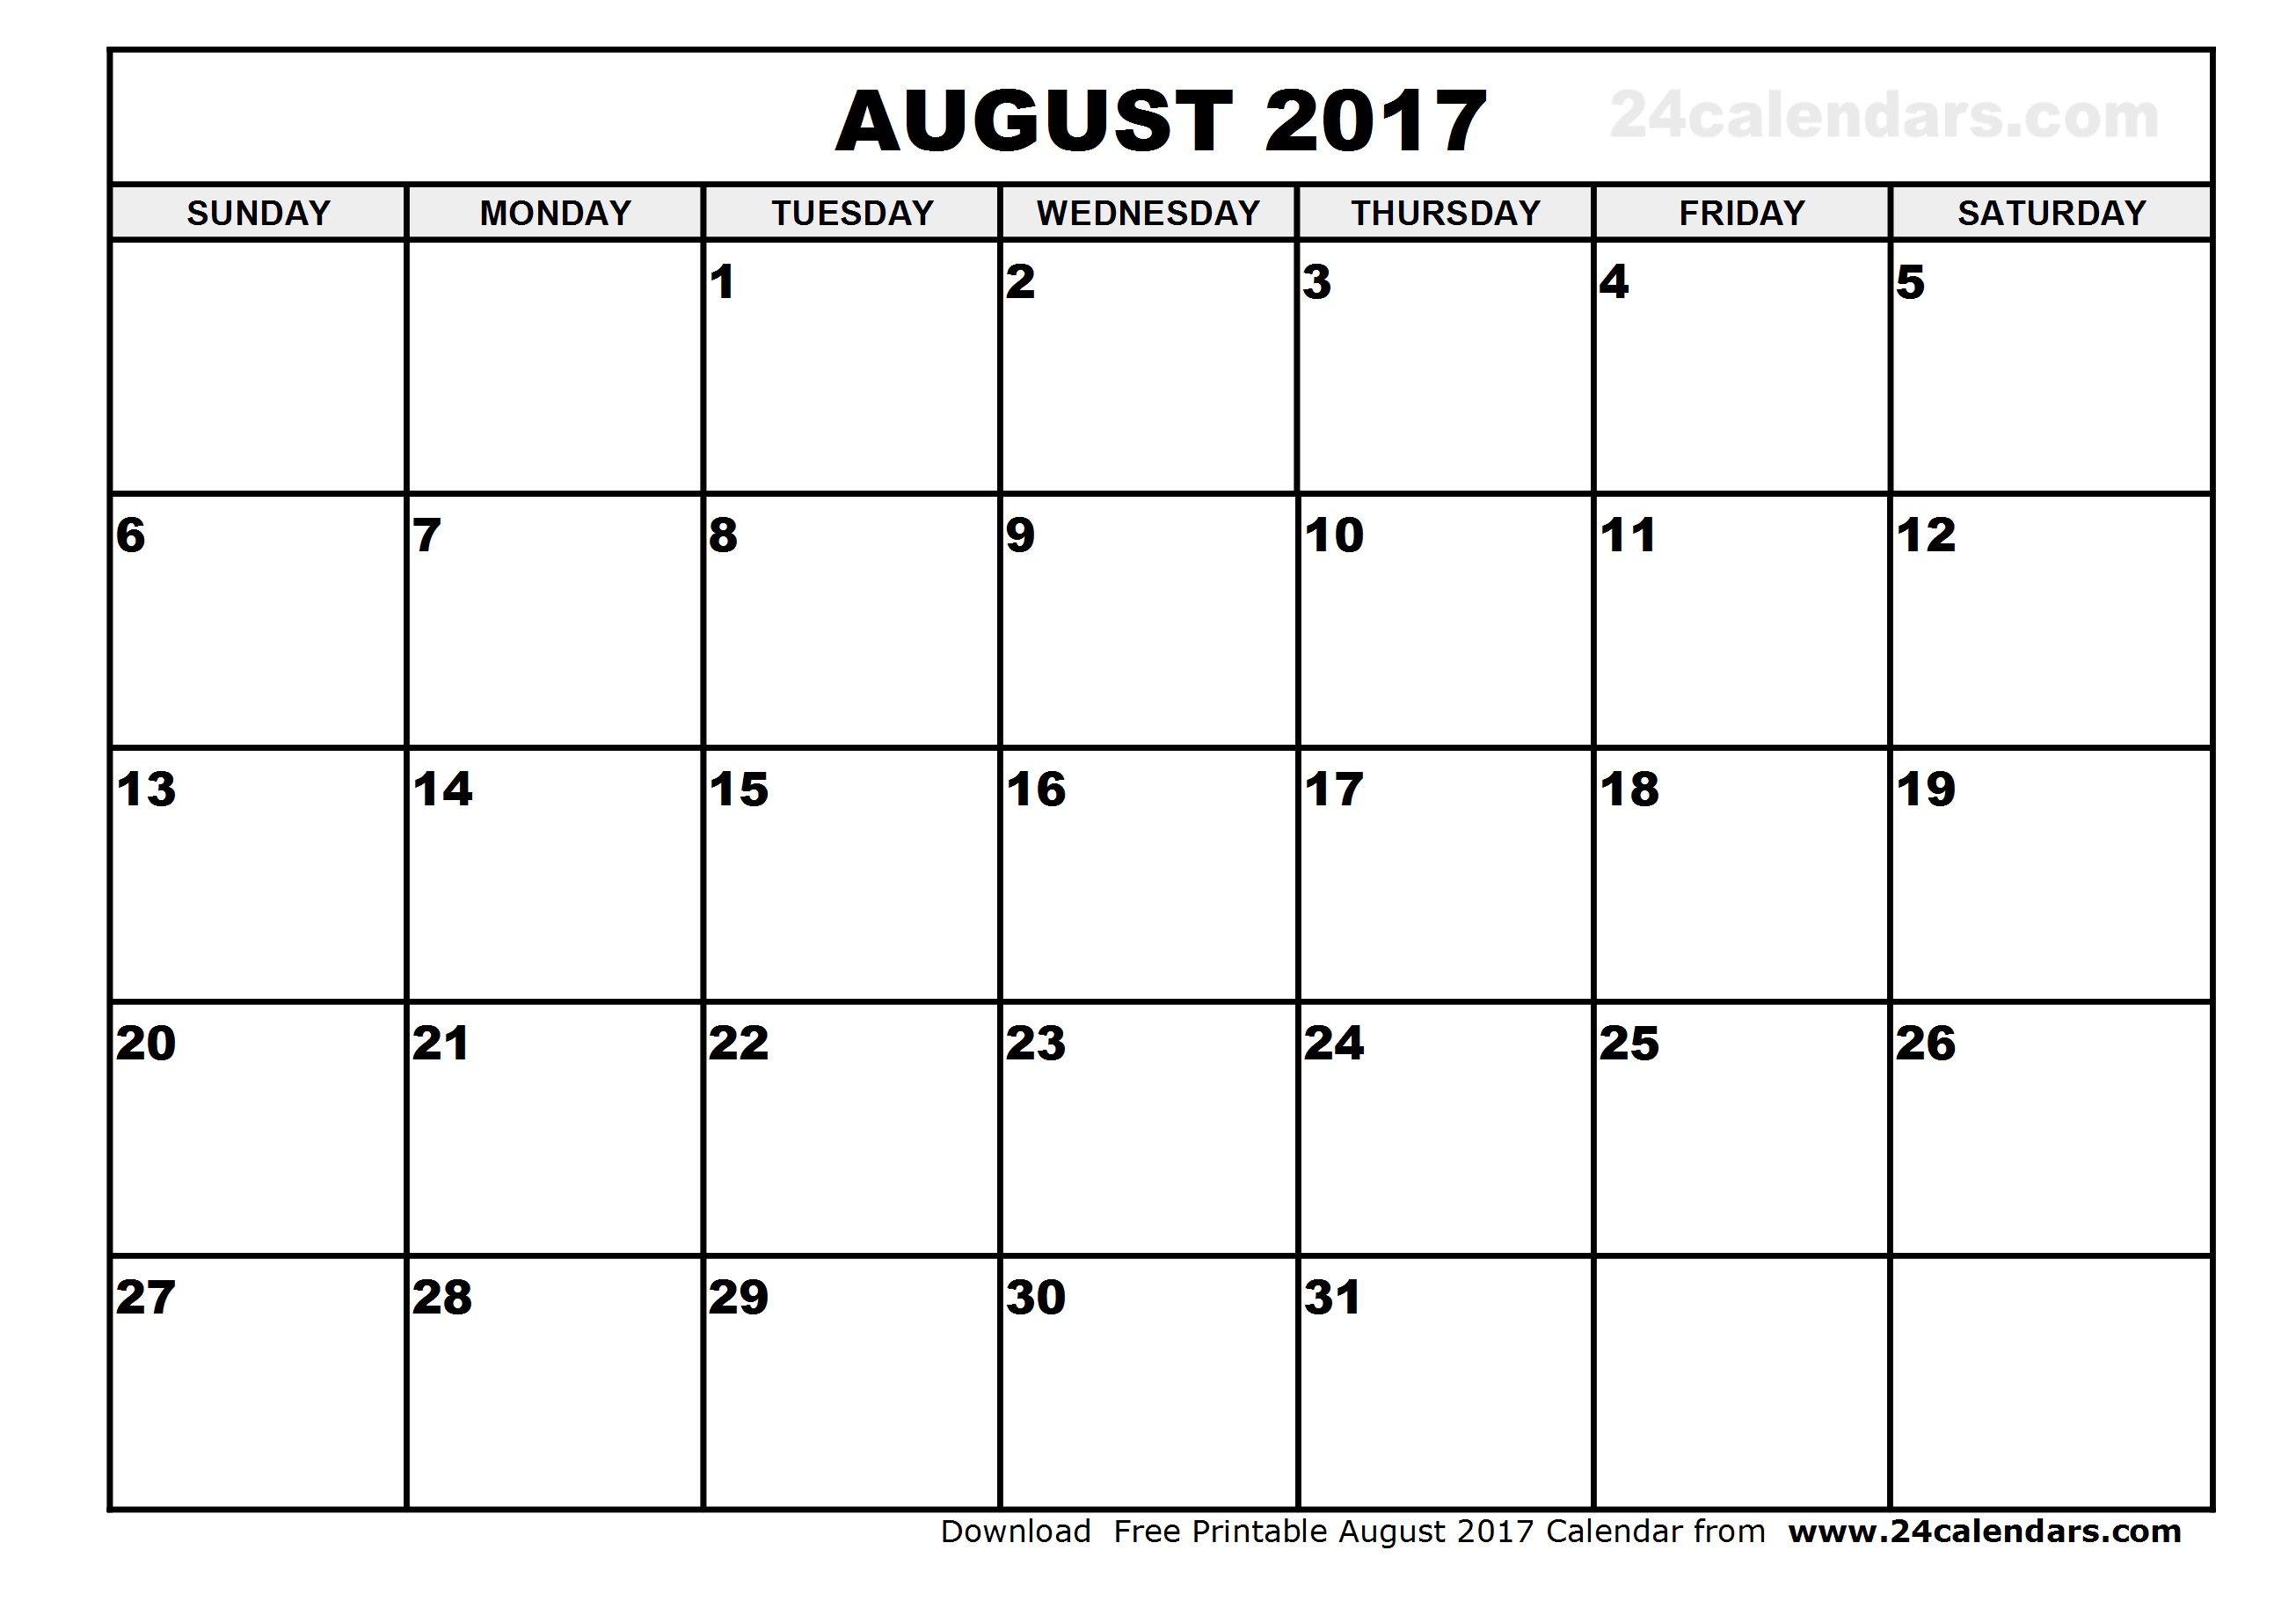 August 2017 Calendar Excel | weekly calendar template